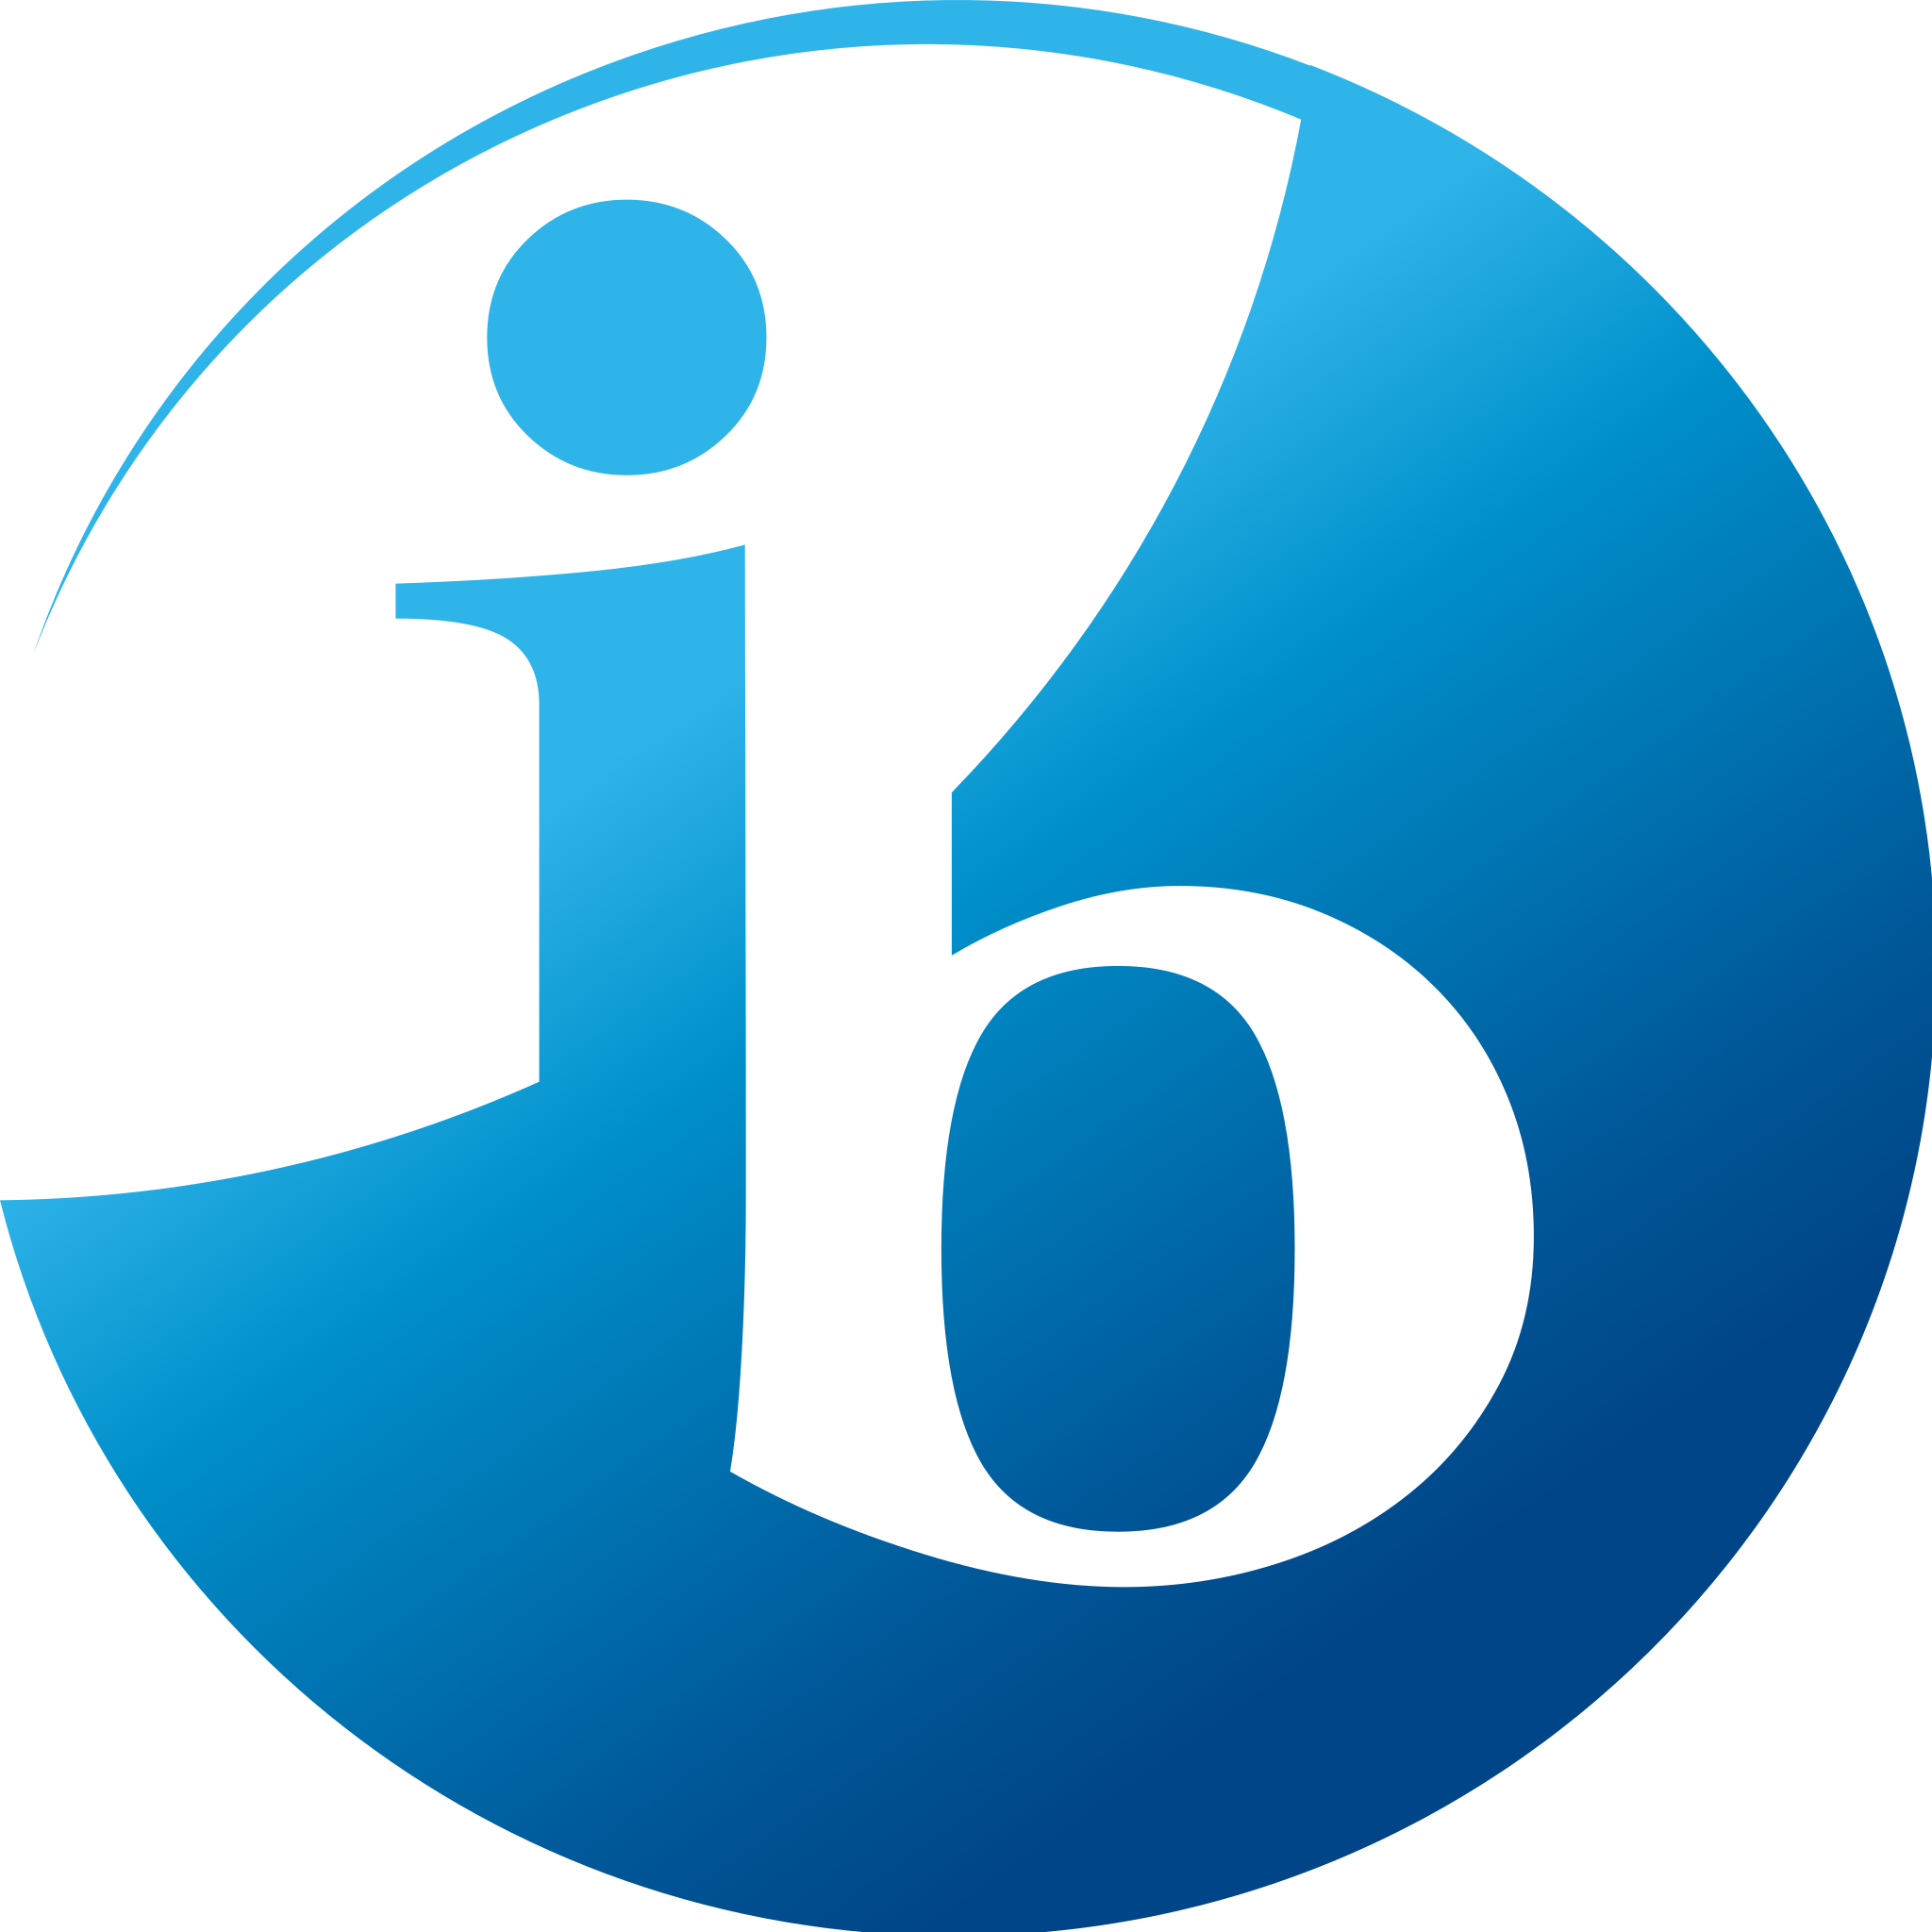 ib round logo